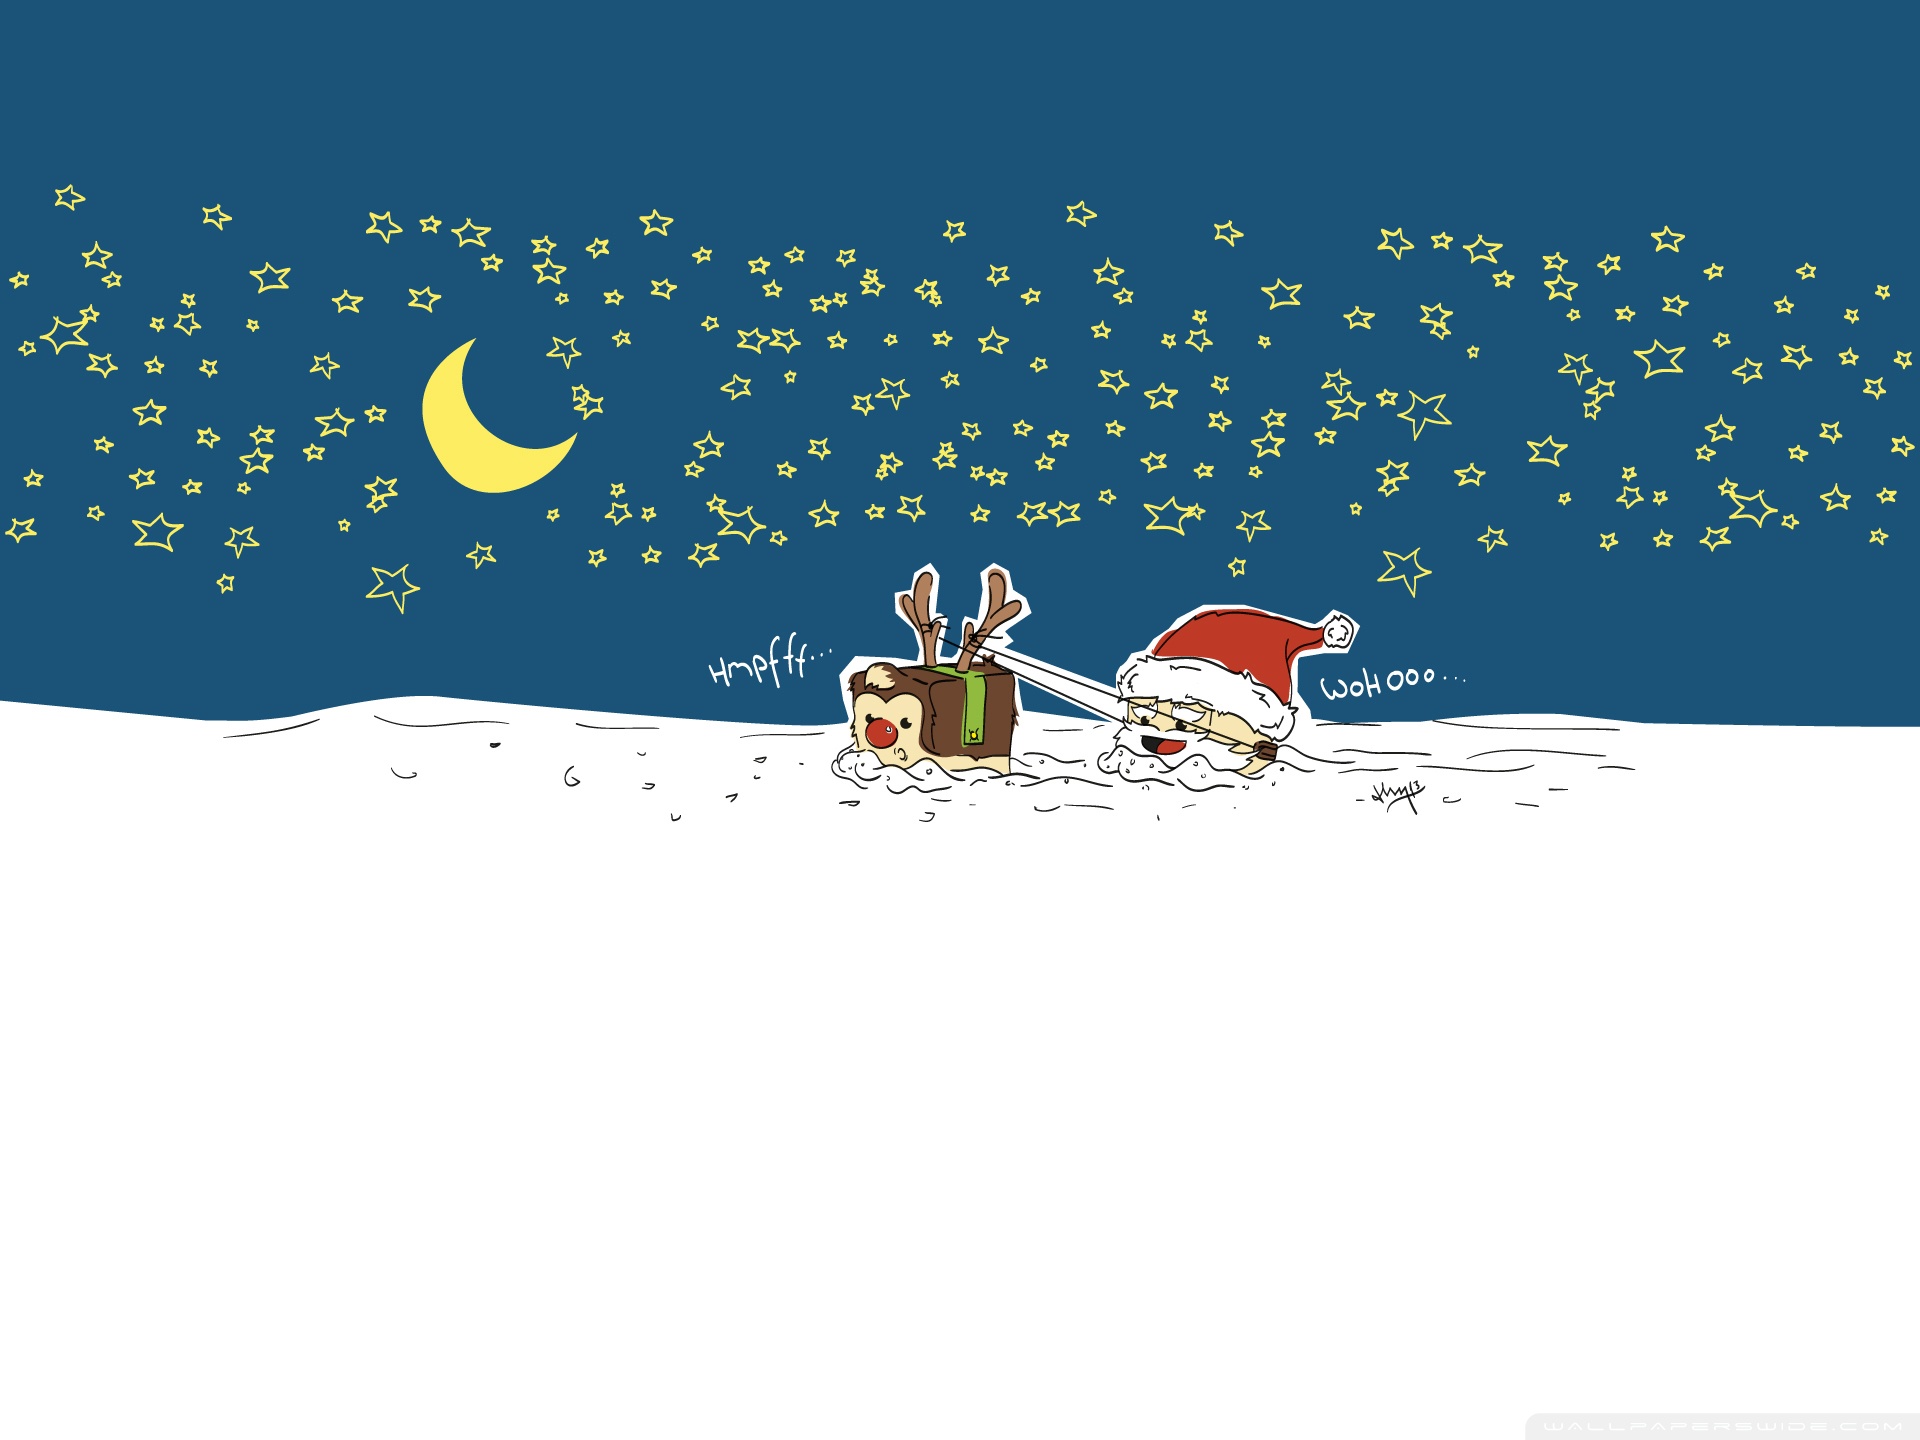 Cute Cartoon Christmas Wallpapers